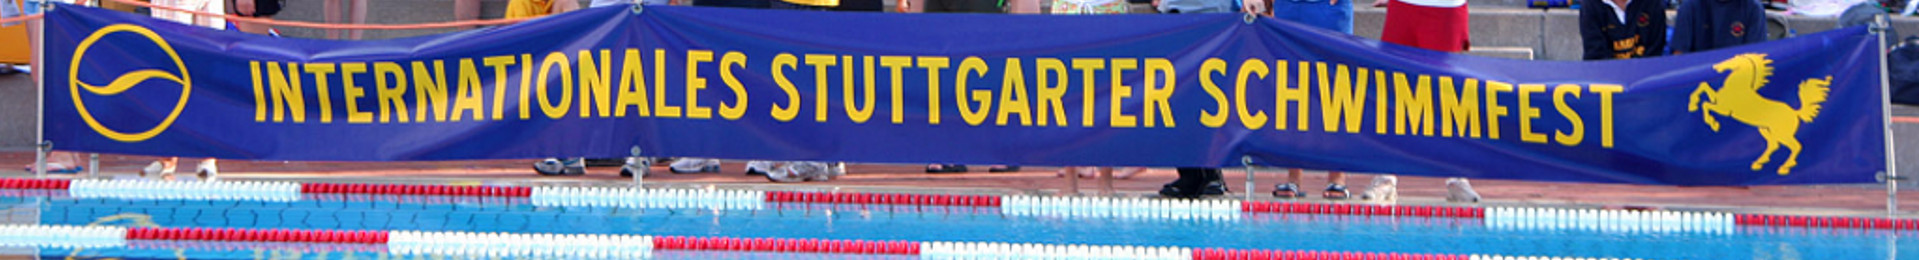 http://internationales-stuttgarter-schwimmfest.de/images/headers/header1919.jpg